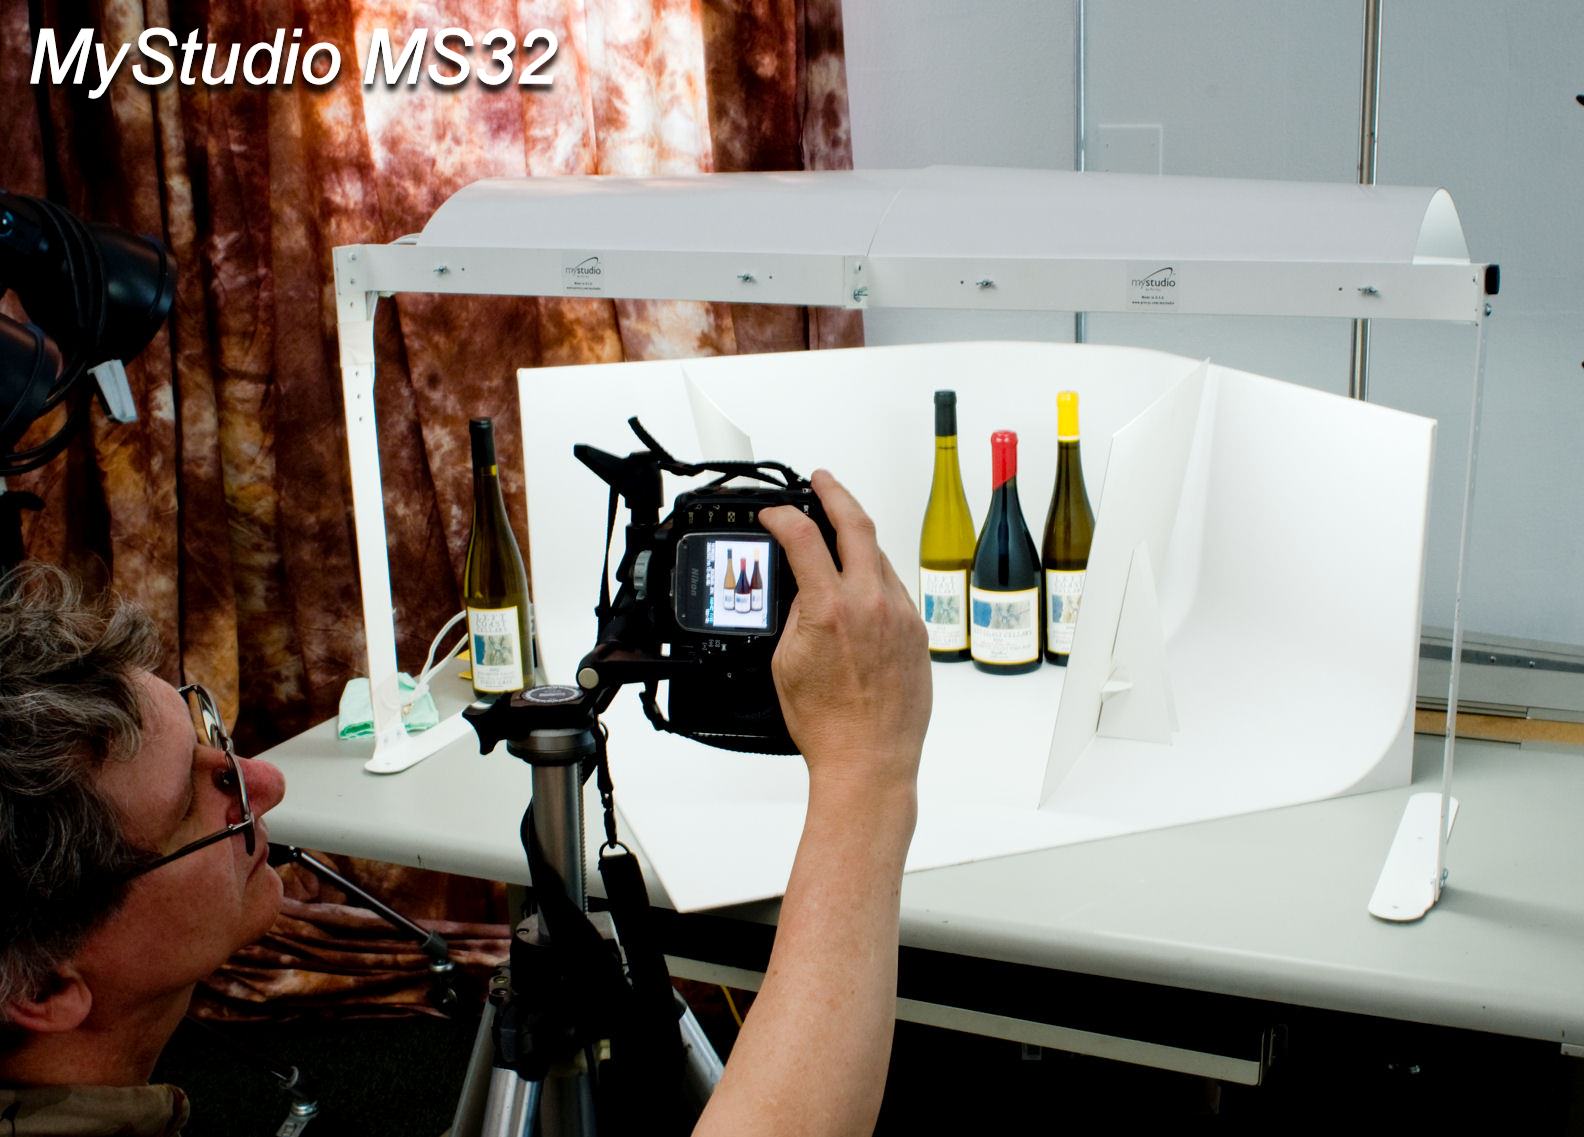 MyStudio MS32 table top photo studio in use